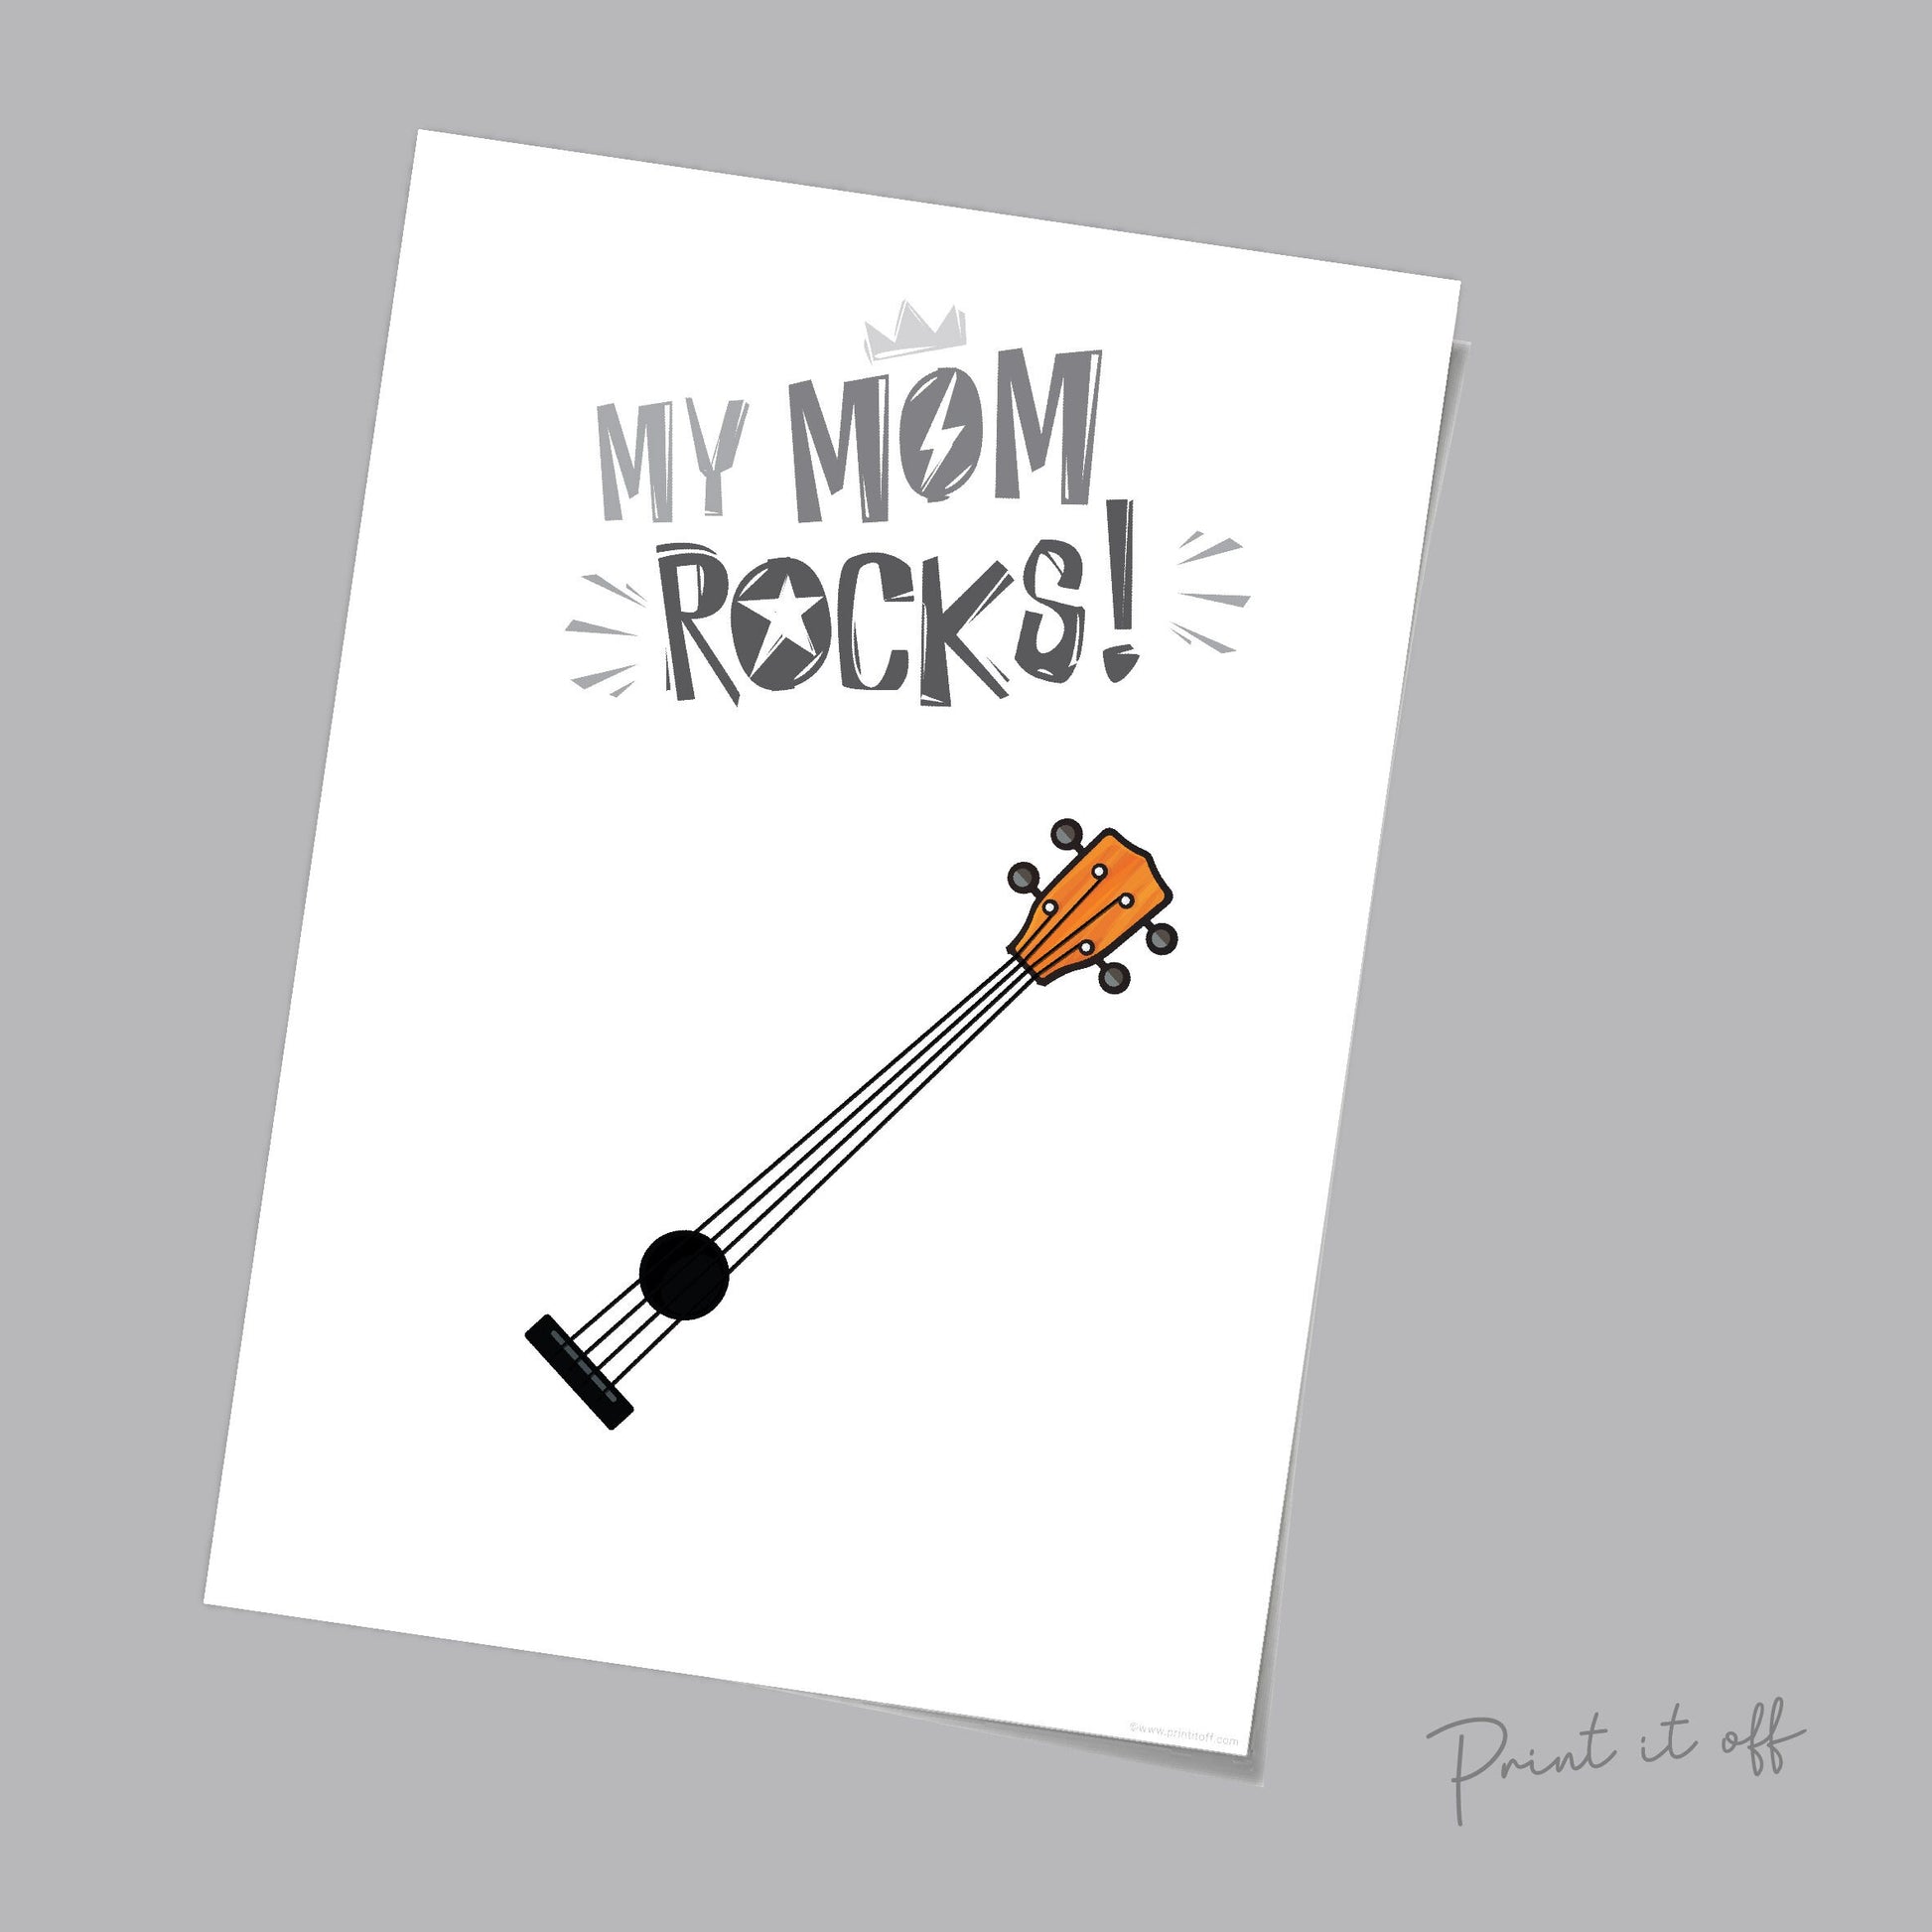 My Mom Rocks Guitar / Handprint Art Craft / Mother's Day Birthday / Kids Baby Toddler / Keepsake Craft DIY Gift Card / Print it off 0419